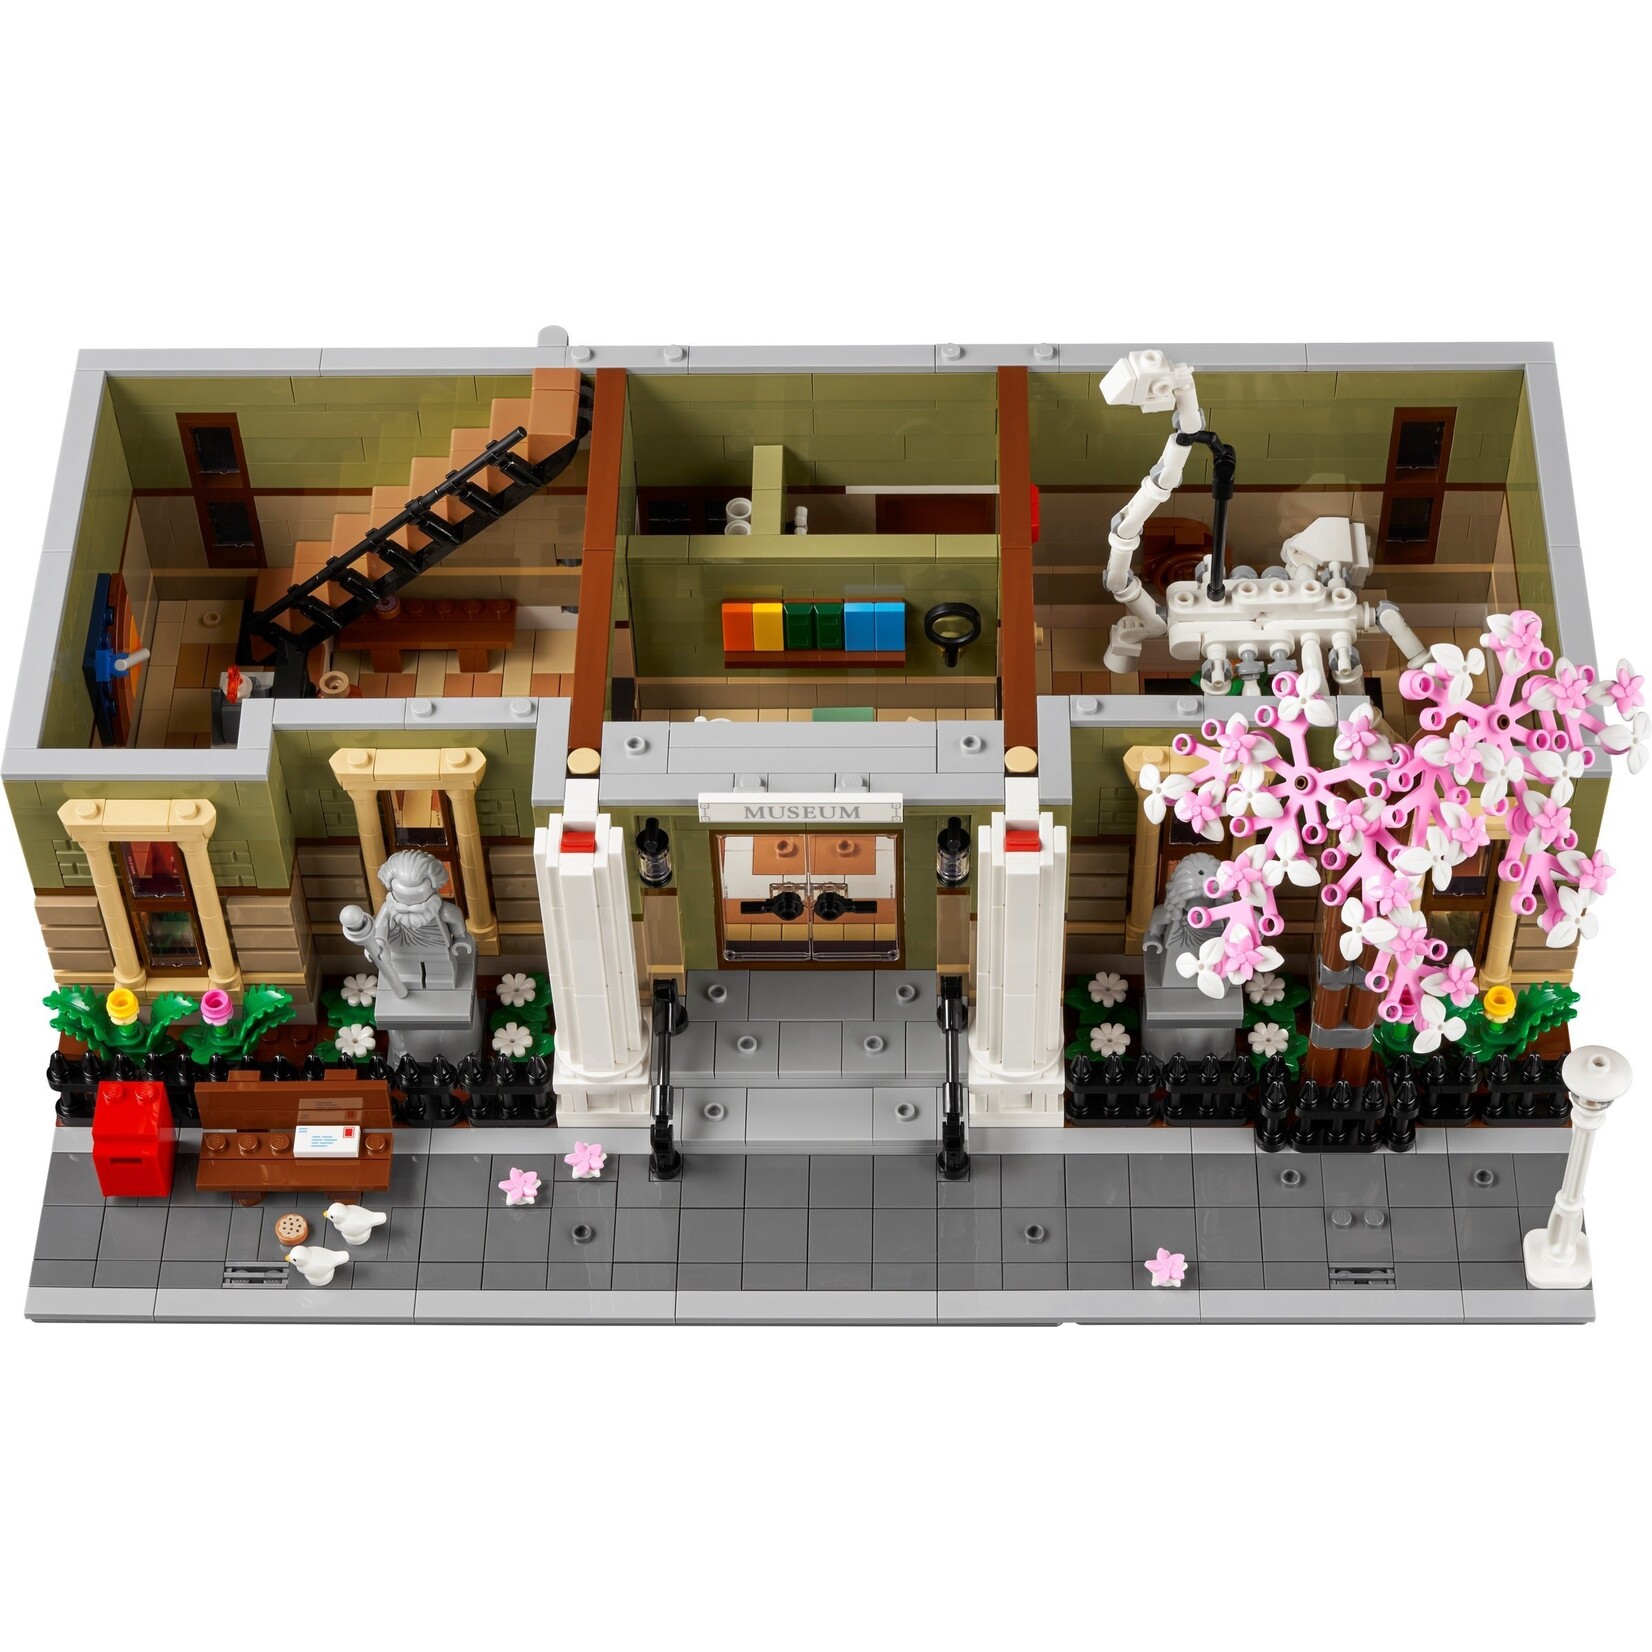 LEGO Natuurhistorisch museum - 10326